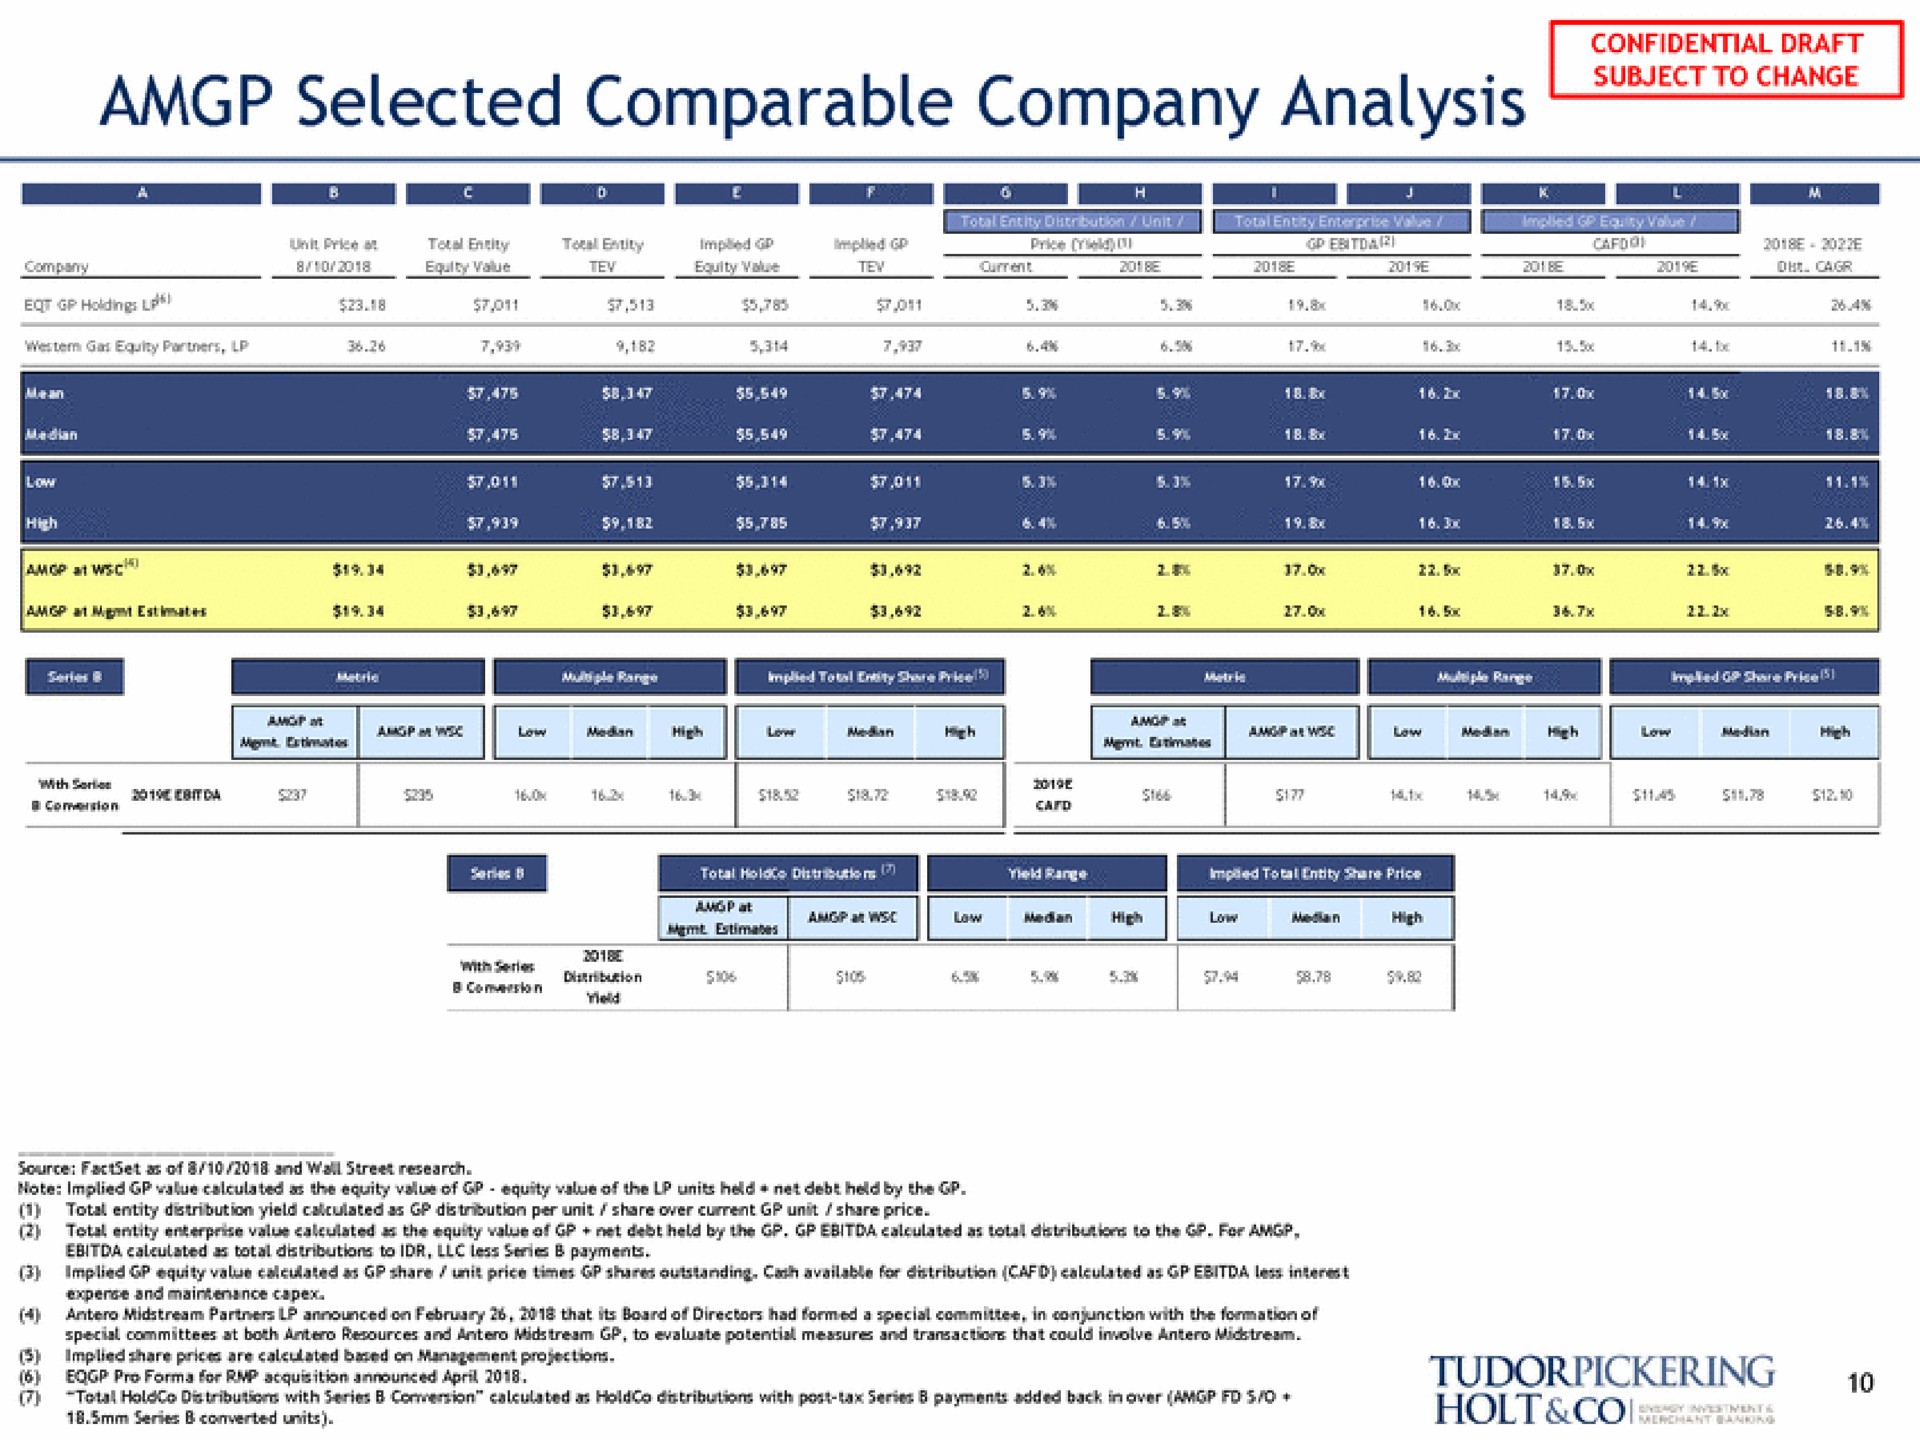 selected comparable company analysis sett | Tudor, Pickering, Holt & Co